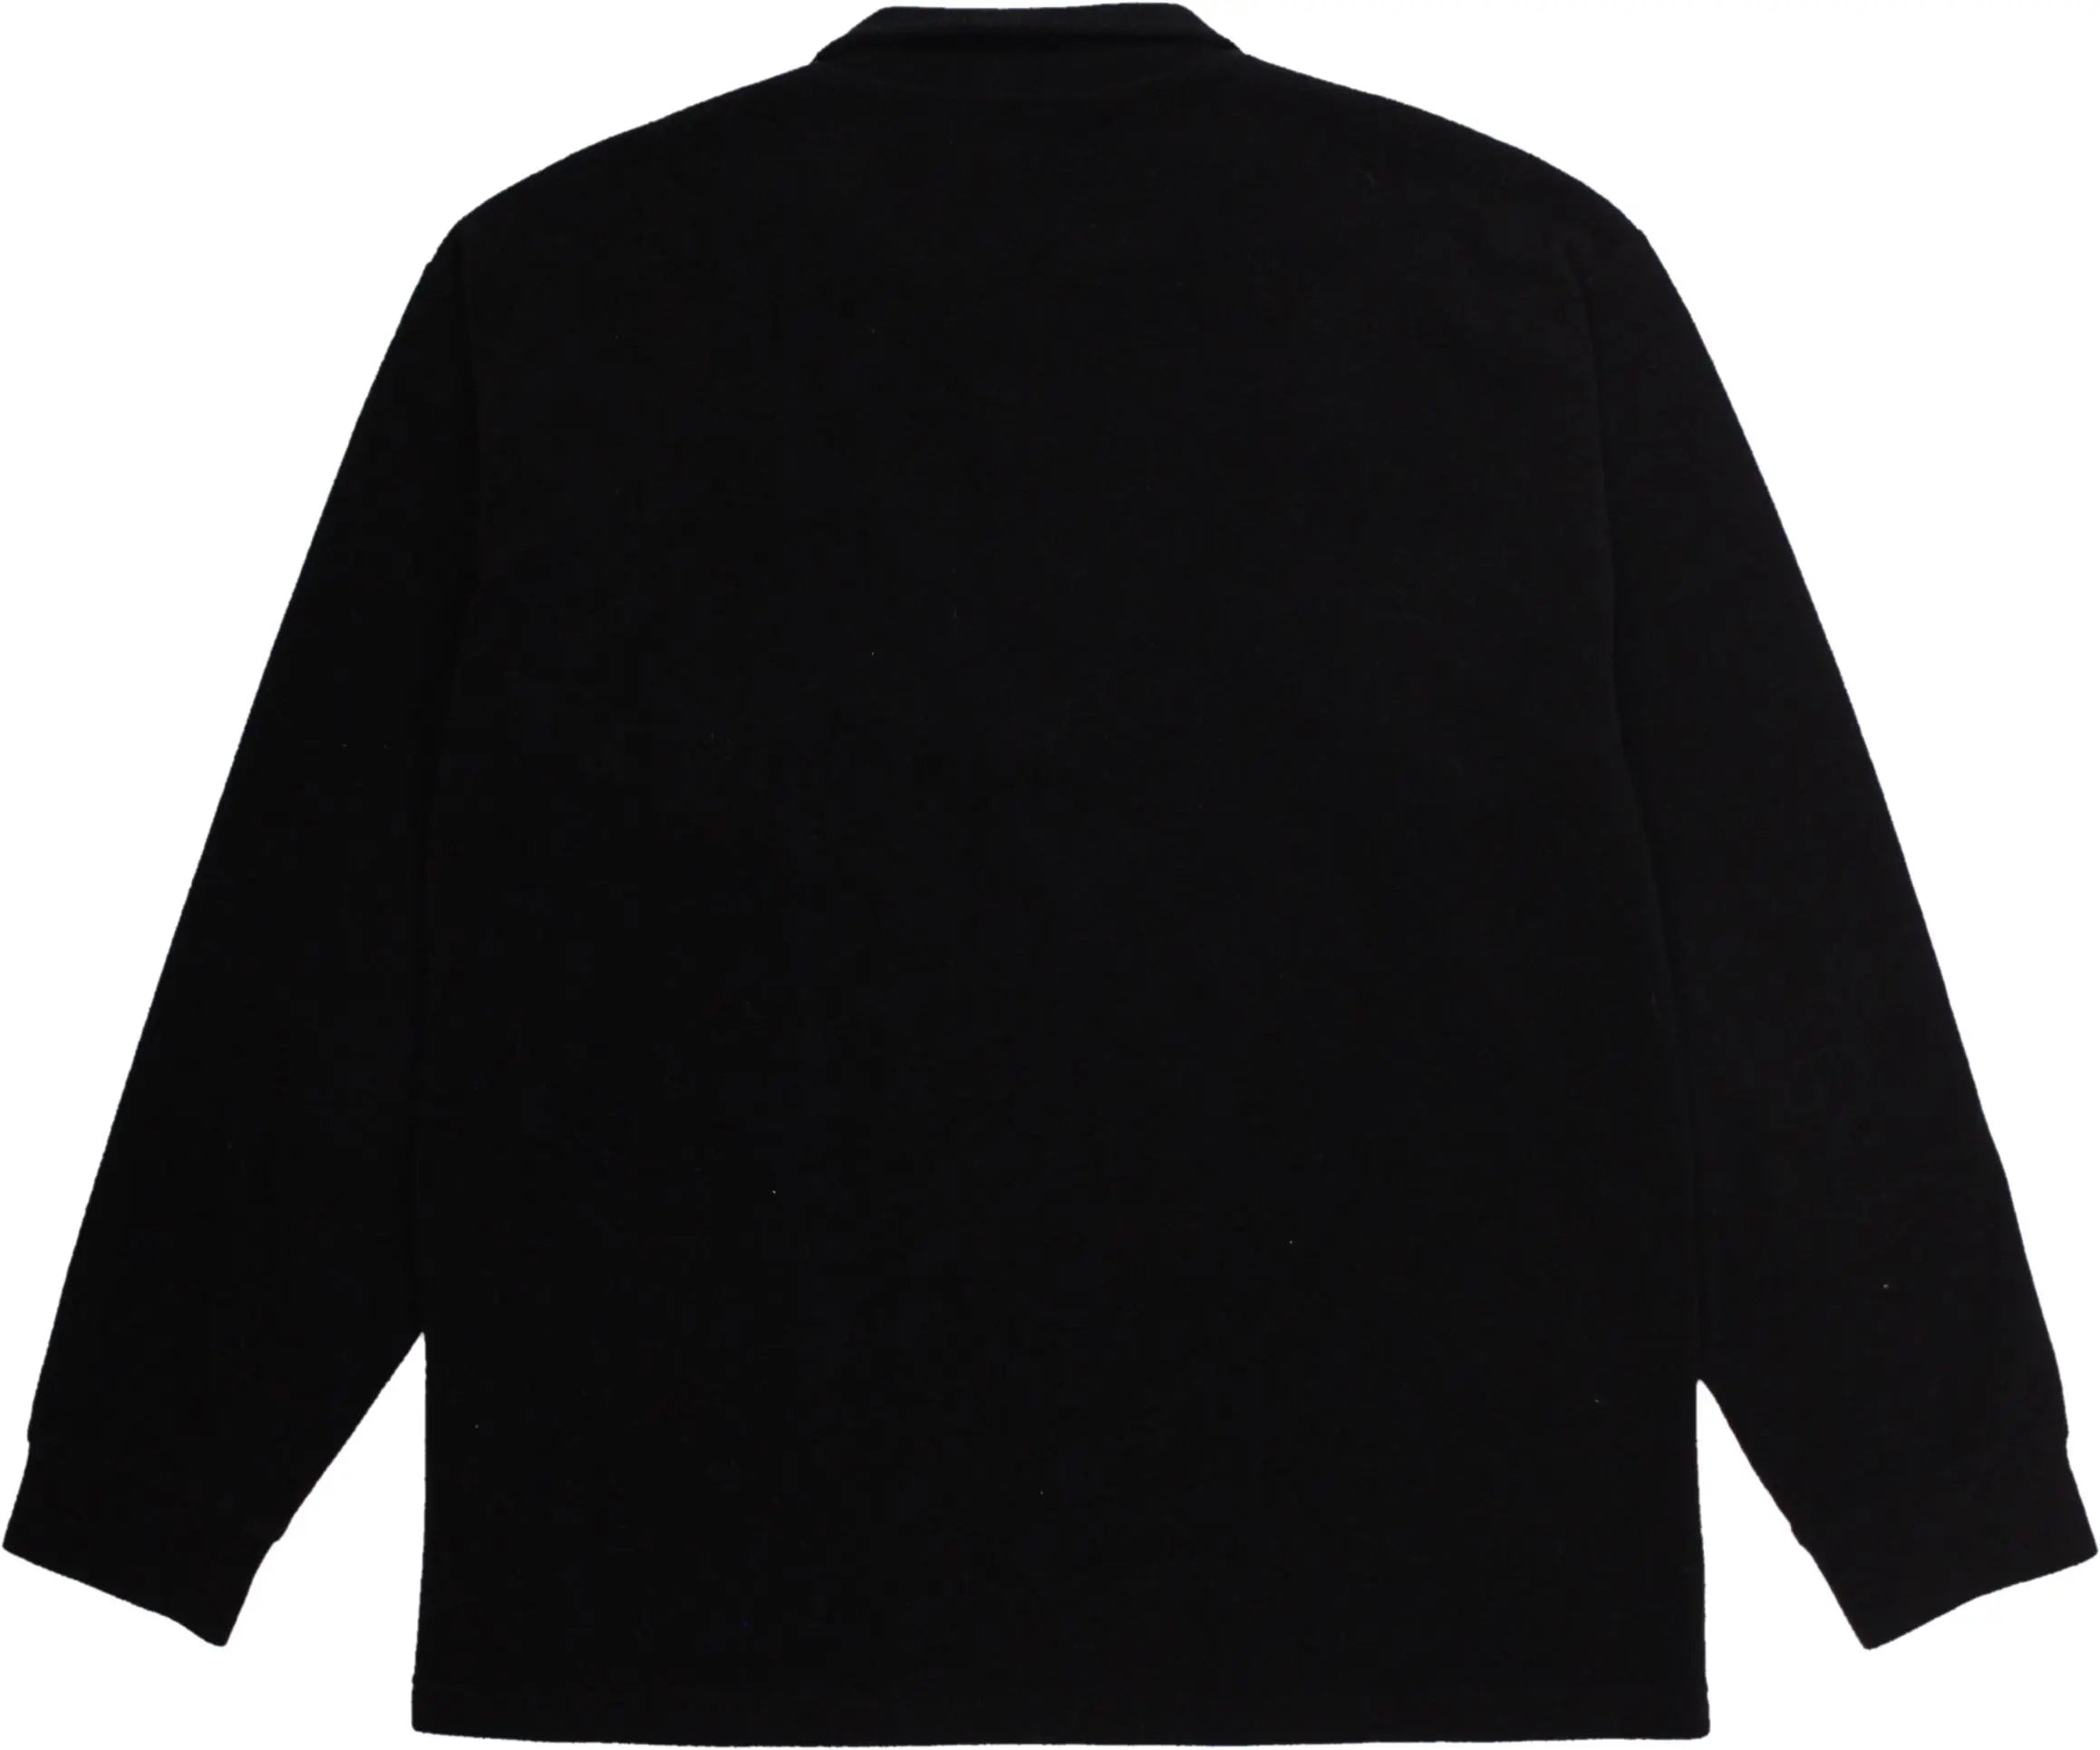 Fila - Black Fleece Jumper by Fila- ThriftTale.com - Vintage and second handclothing